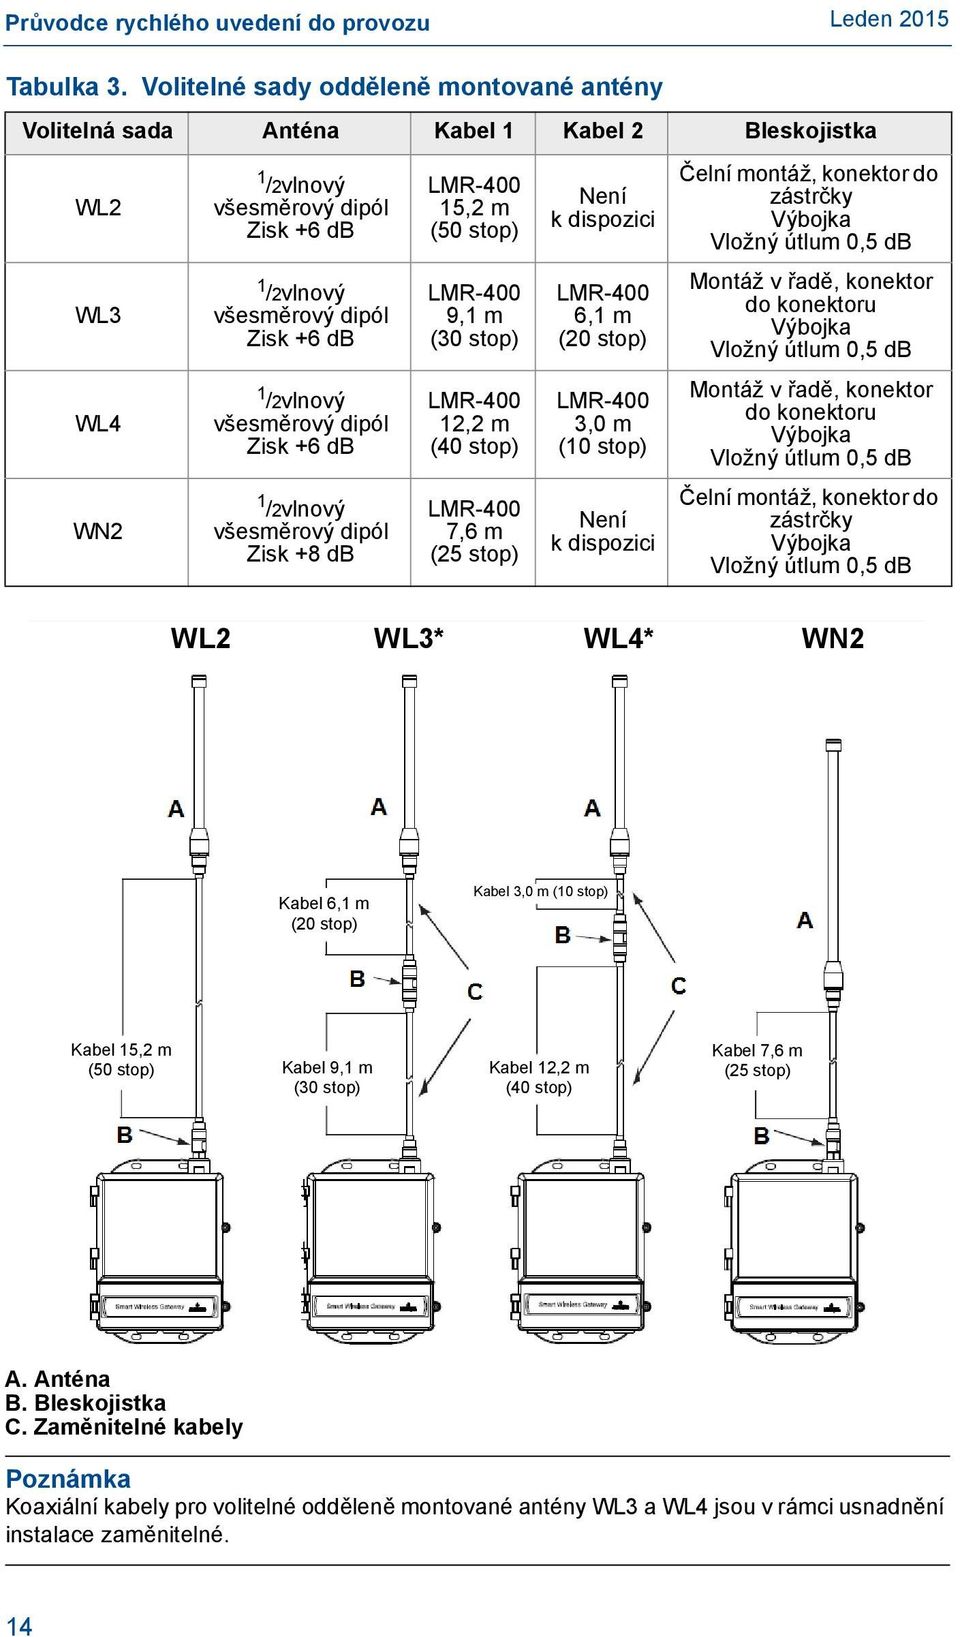 do zástrčky Výbojka Vložný útlum 0,5 db WL3 1 /2vlnový všesměrový dipól Zisk +6 db LMR-400 9,1 m (30 stop) LMR-400 6,1 m (20 stop) Montáž v řadě, konektor do konektoru Výbojka Vložný útlum 0,5 db WL4